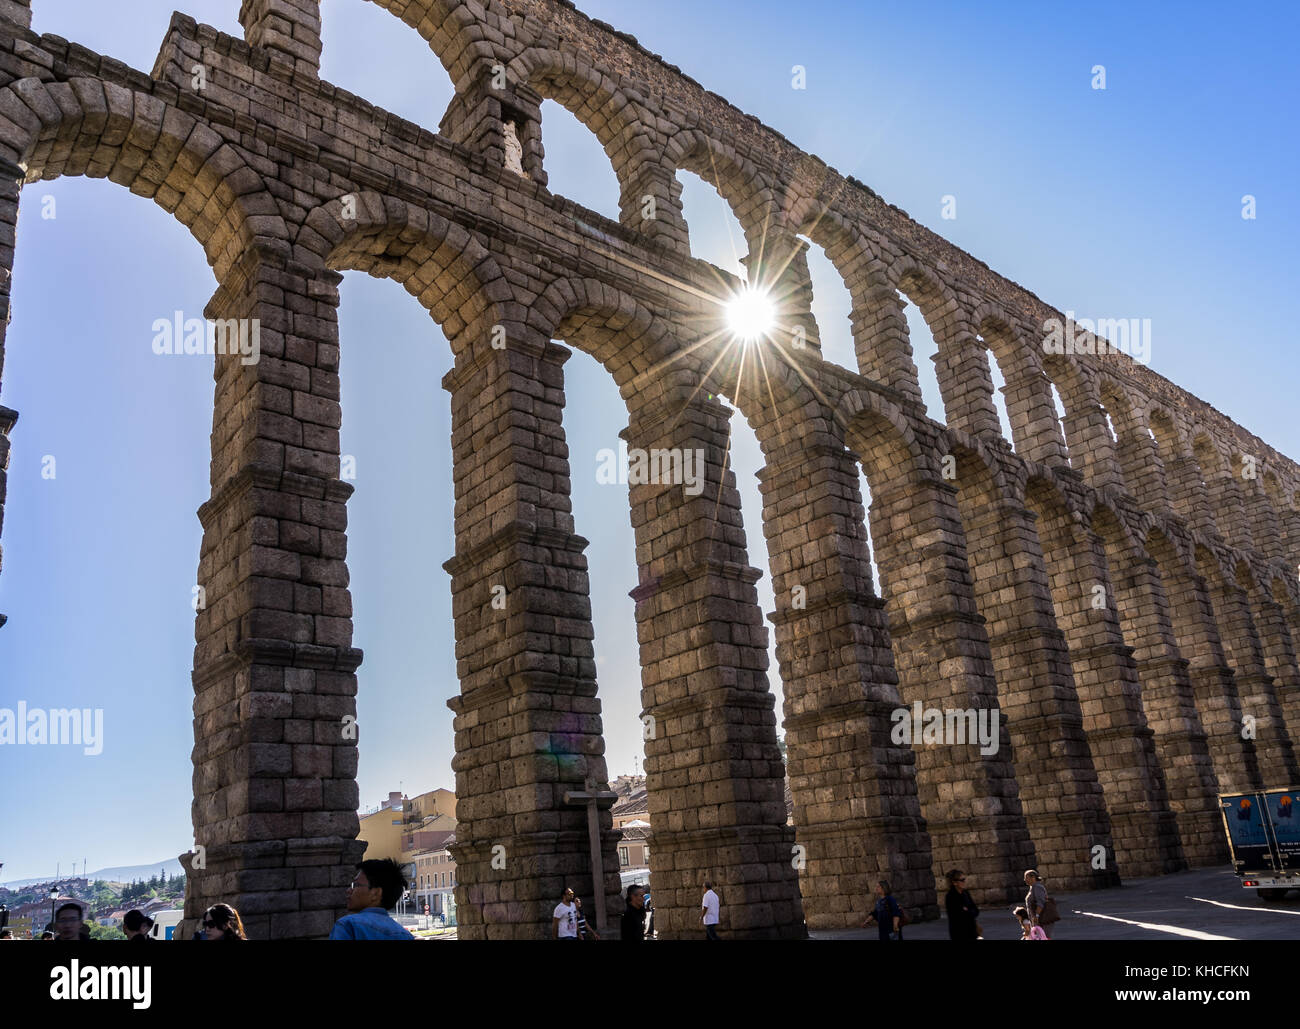 SEGOVIA, SPAIN - SEPTEMBER 2, 2017: The ancient Roman aqueduct  in Segovia Spain. Stock Photo